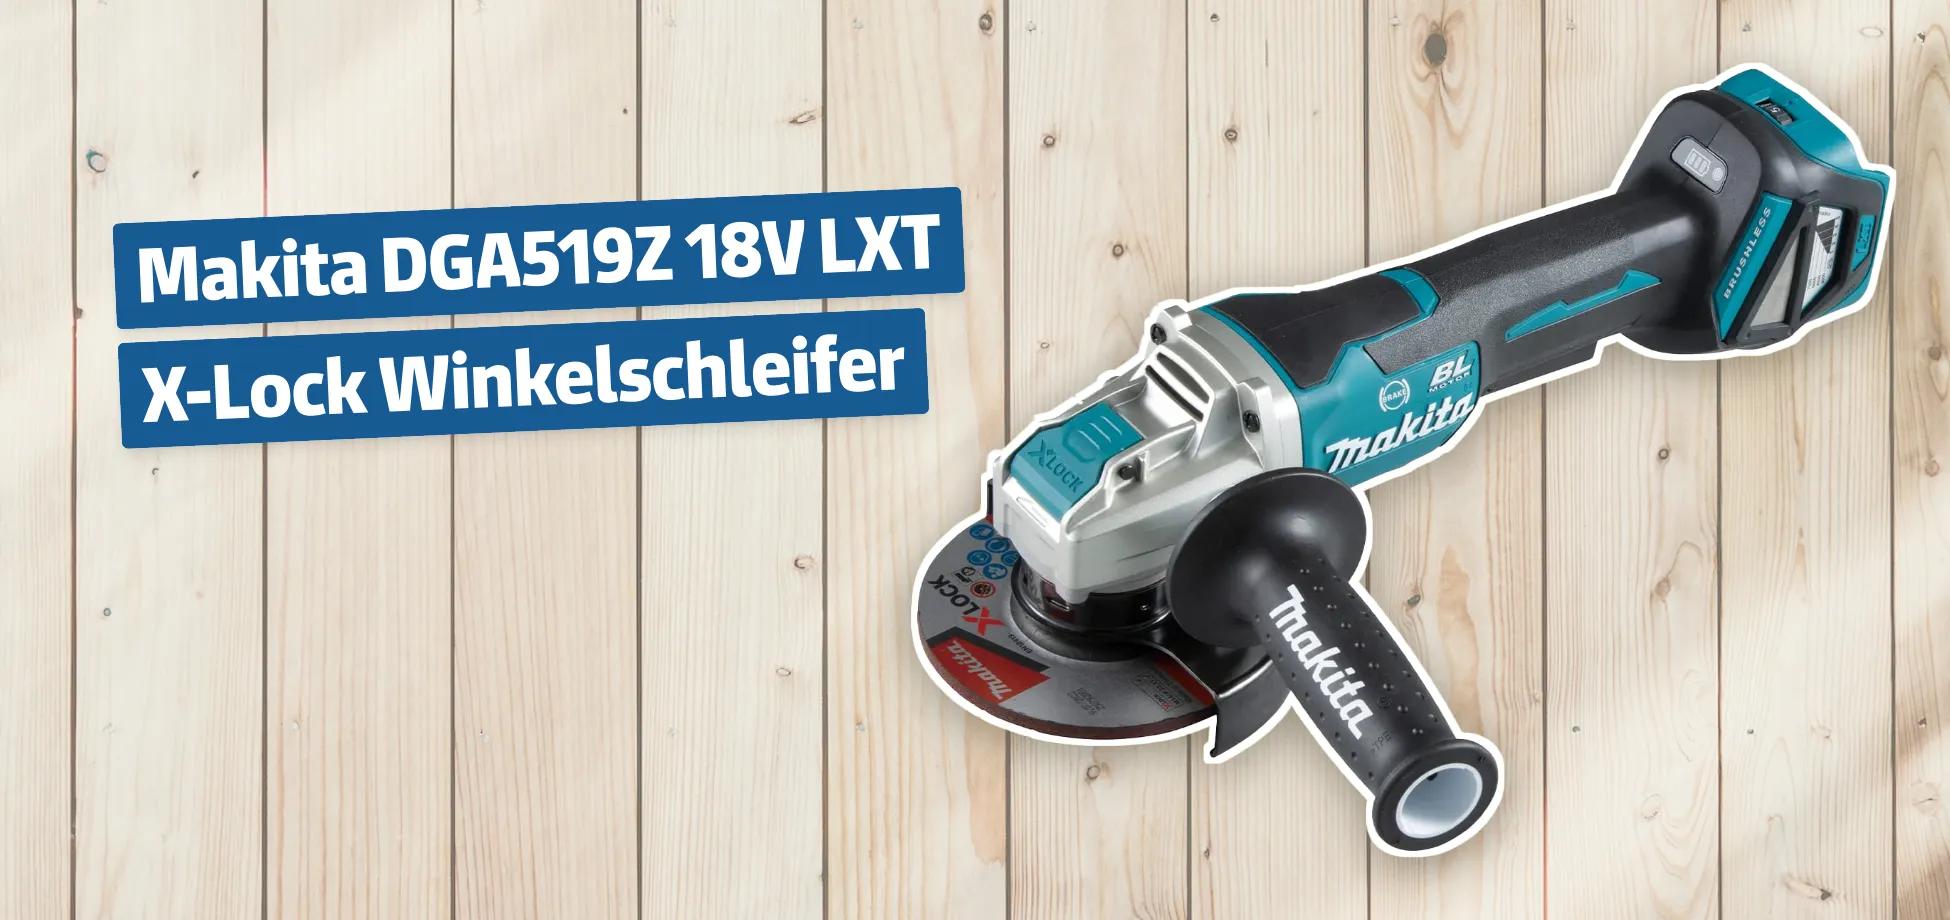 Makita DGA519Z 18V LXT X-Lock Winkelschleifer